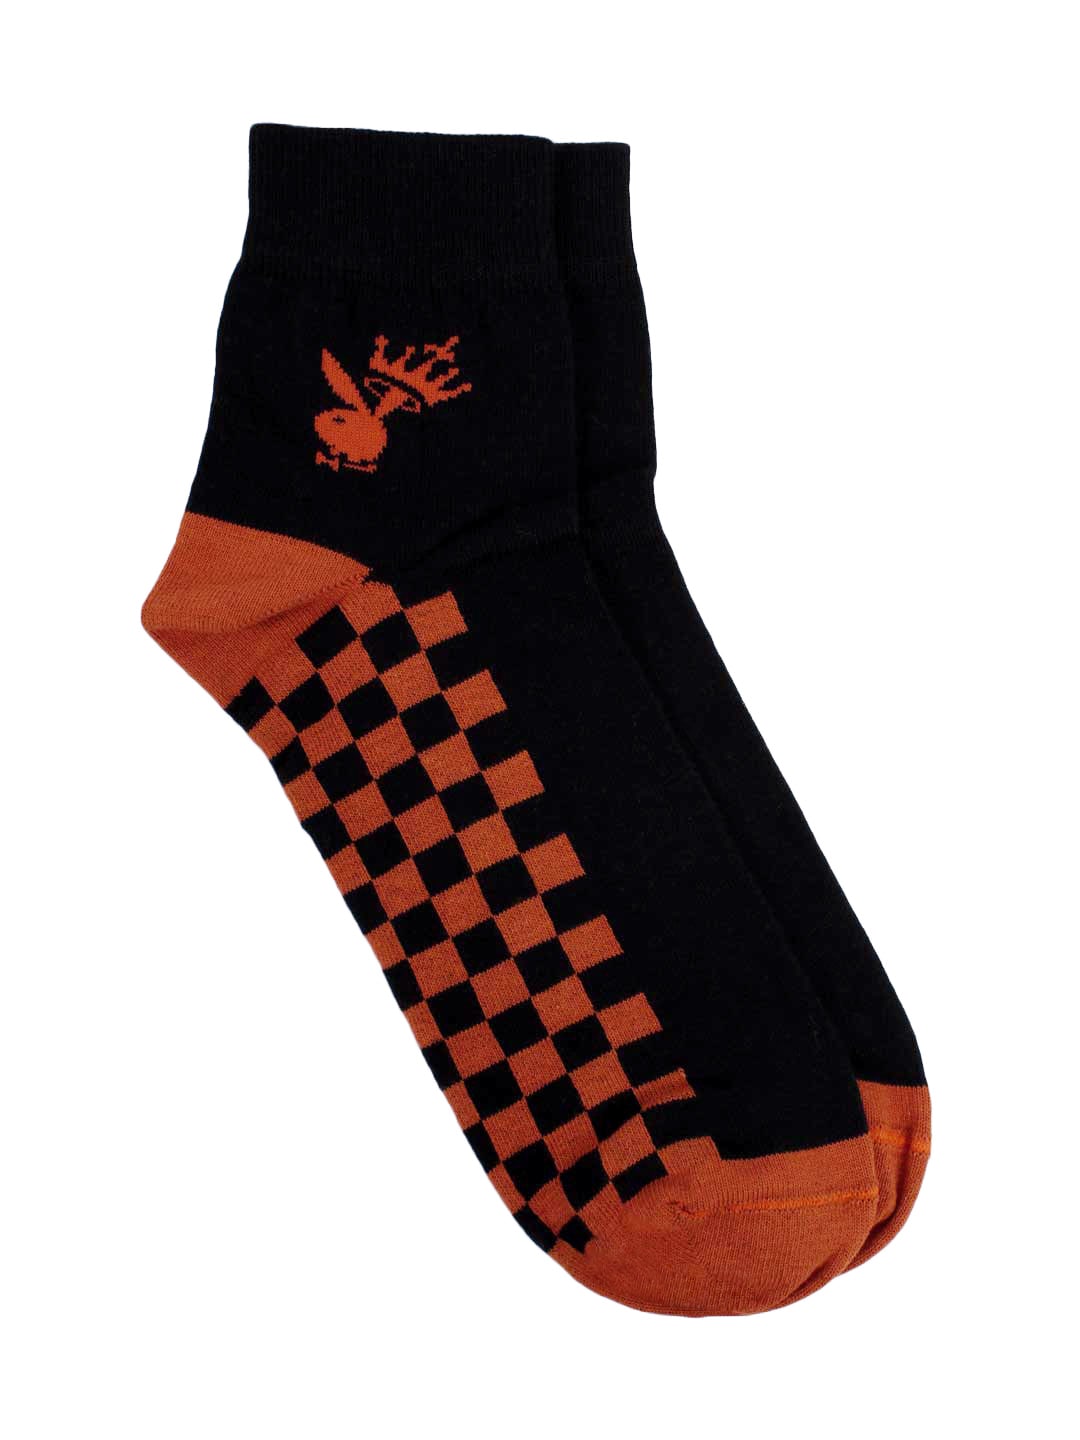 Playboy Men Orange & Black Socks